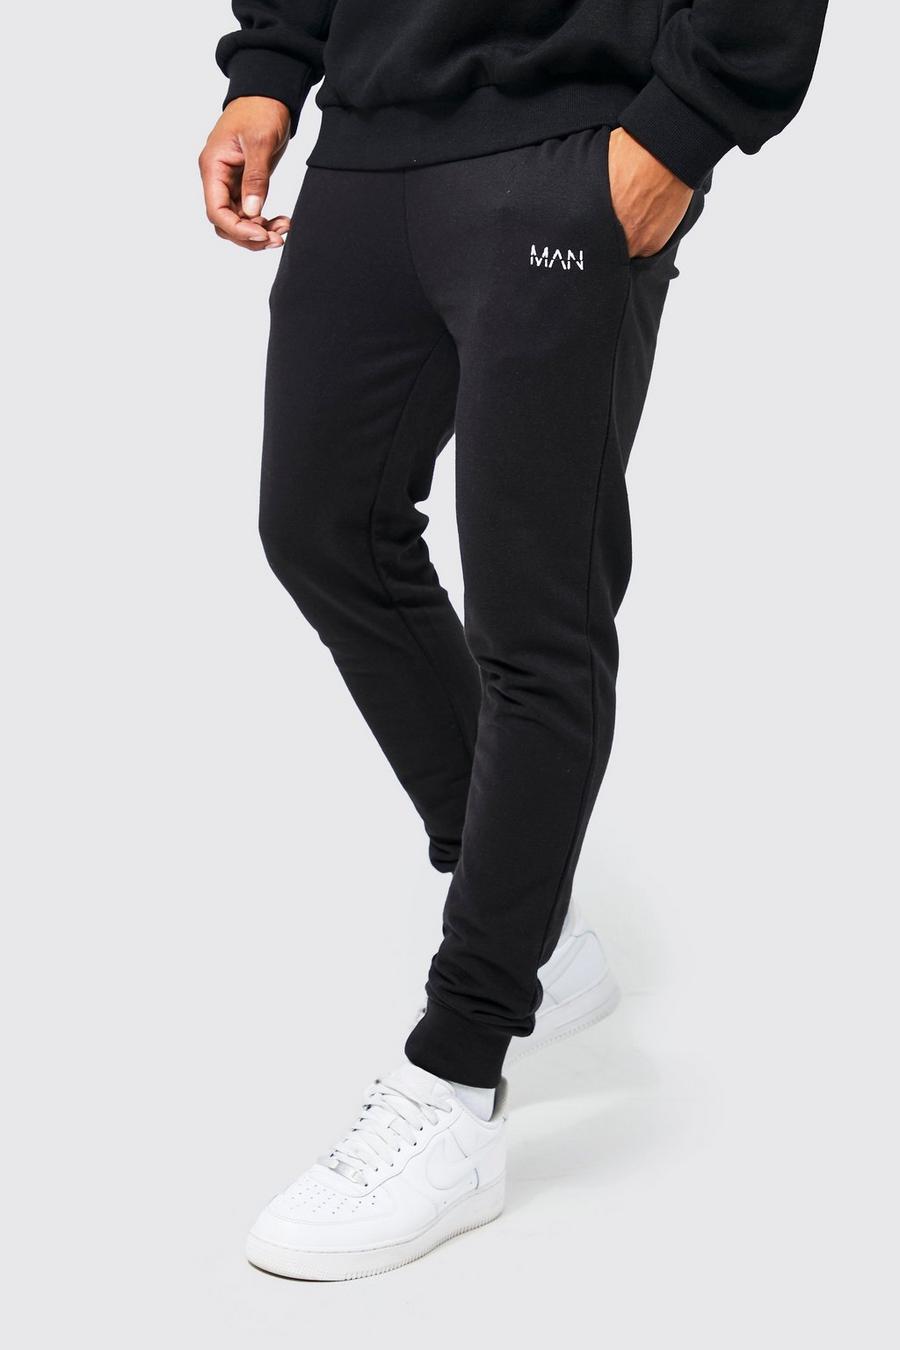 Pantaloni tuta Original Man Super Skinny Fit, Black image number 1